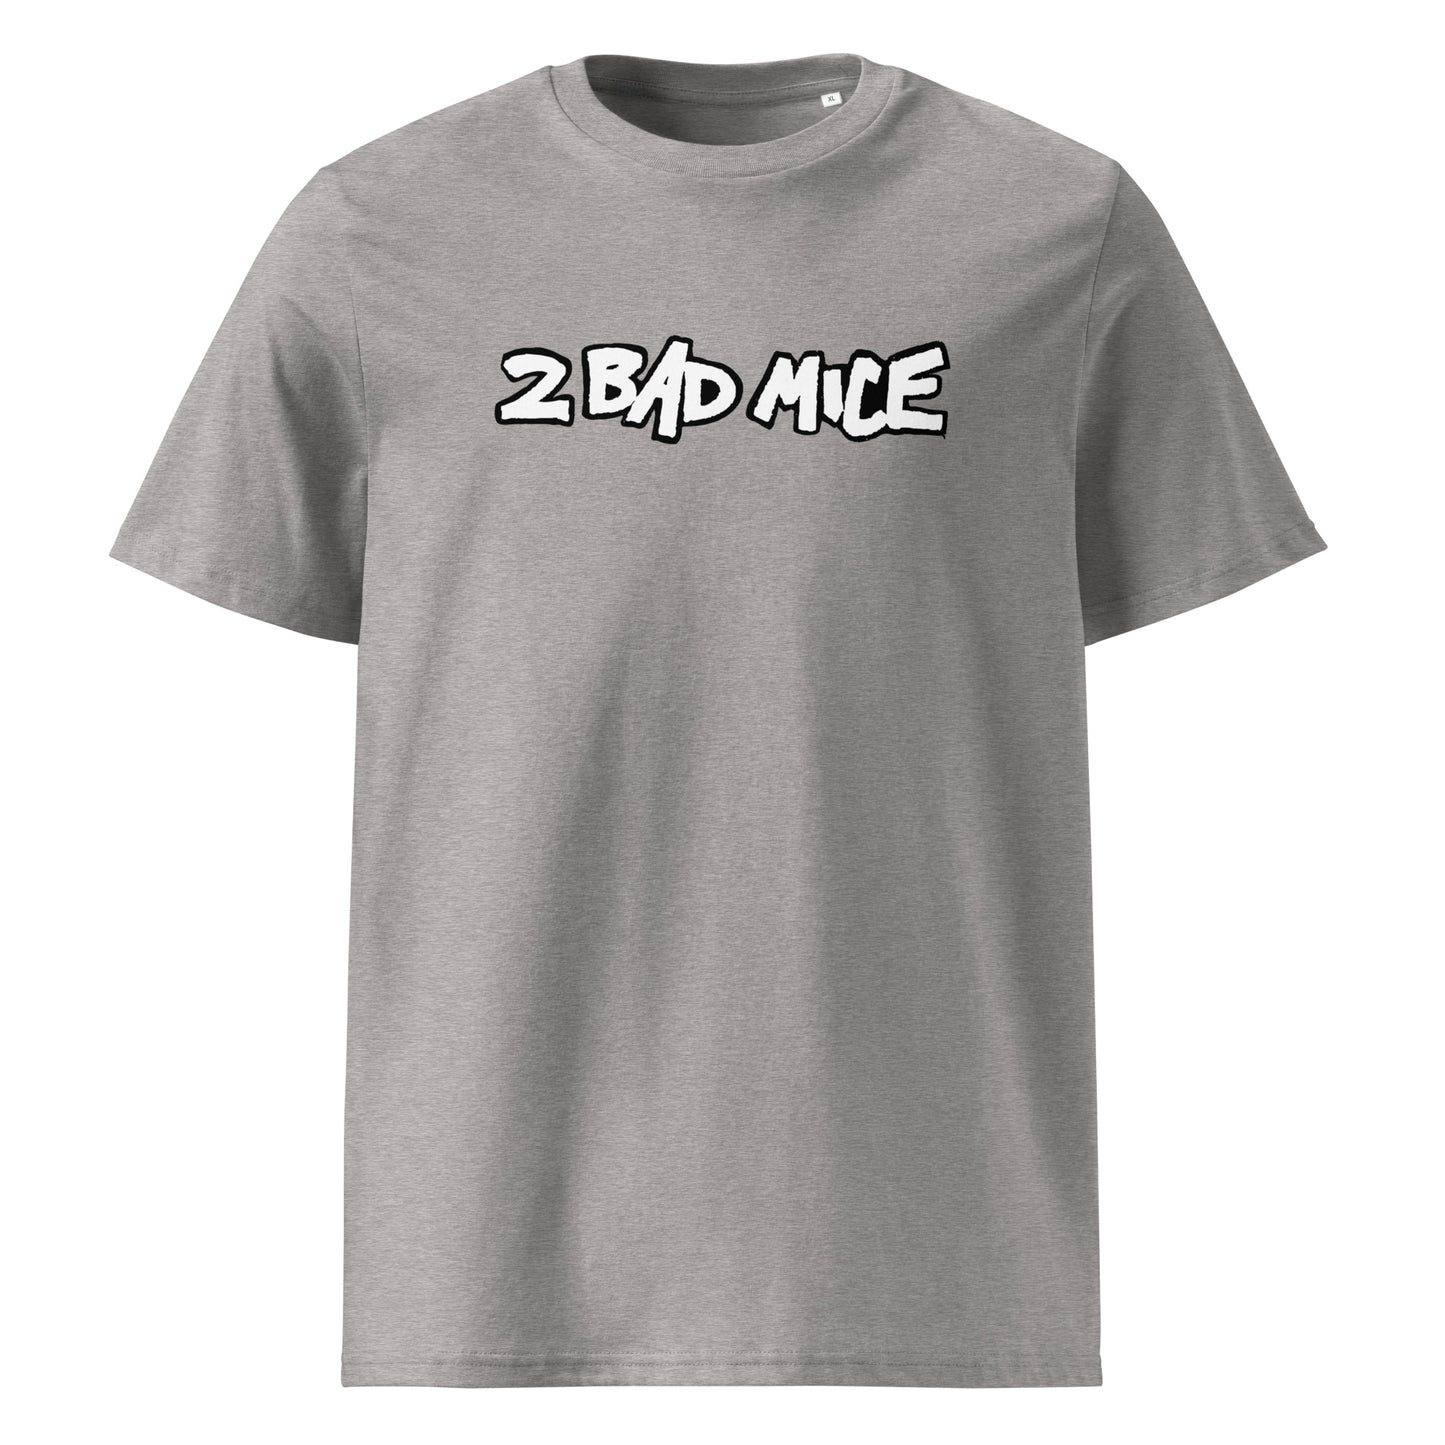 2 Bad Mice (New White Logo v1) Unisex organic cotton t-shirt